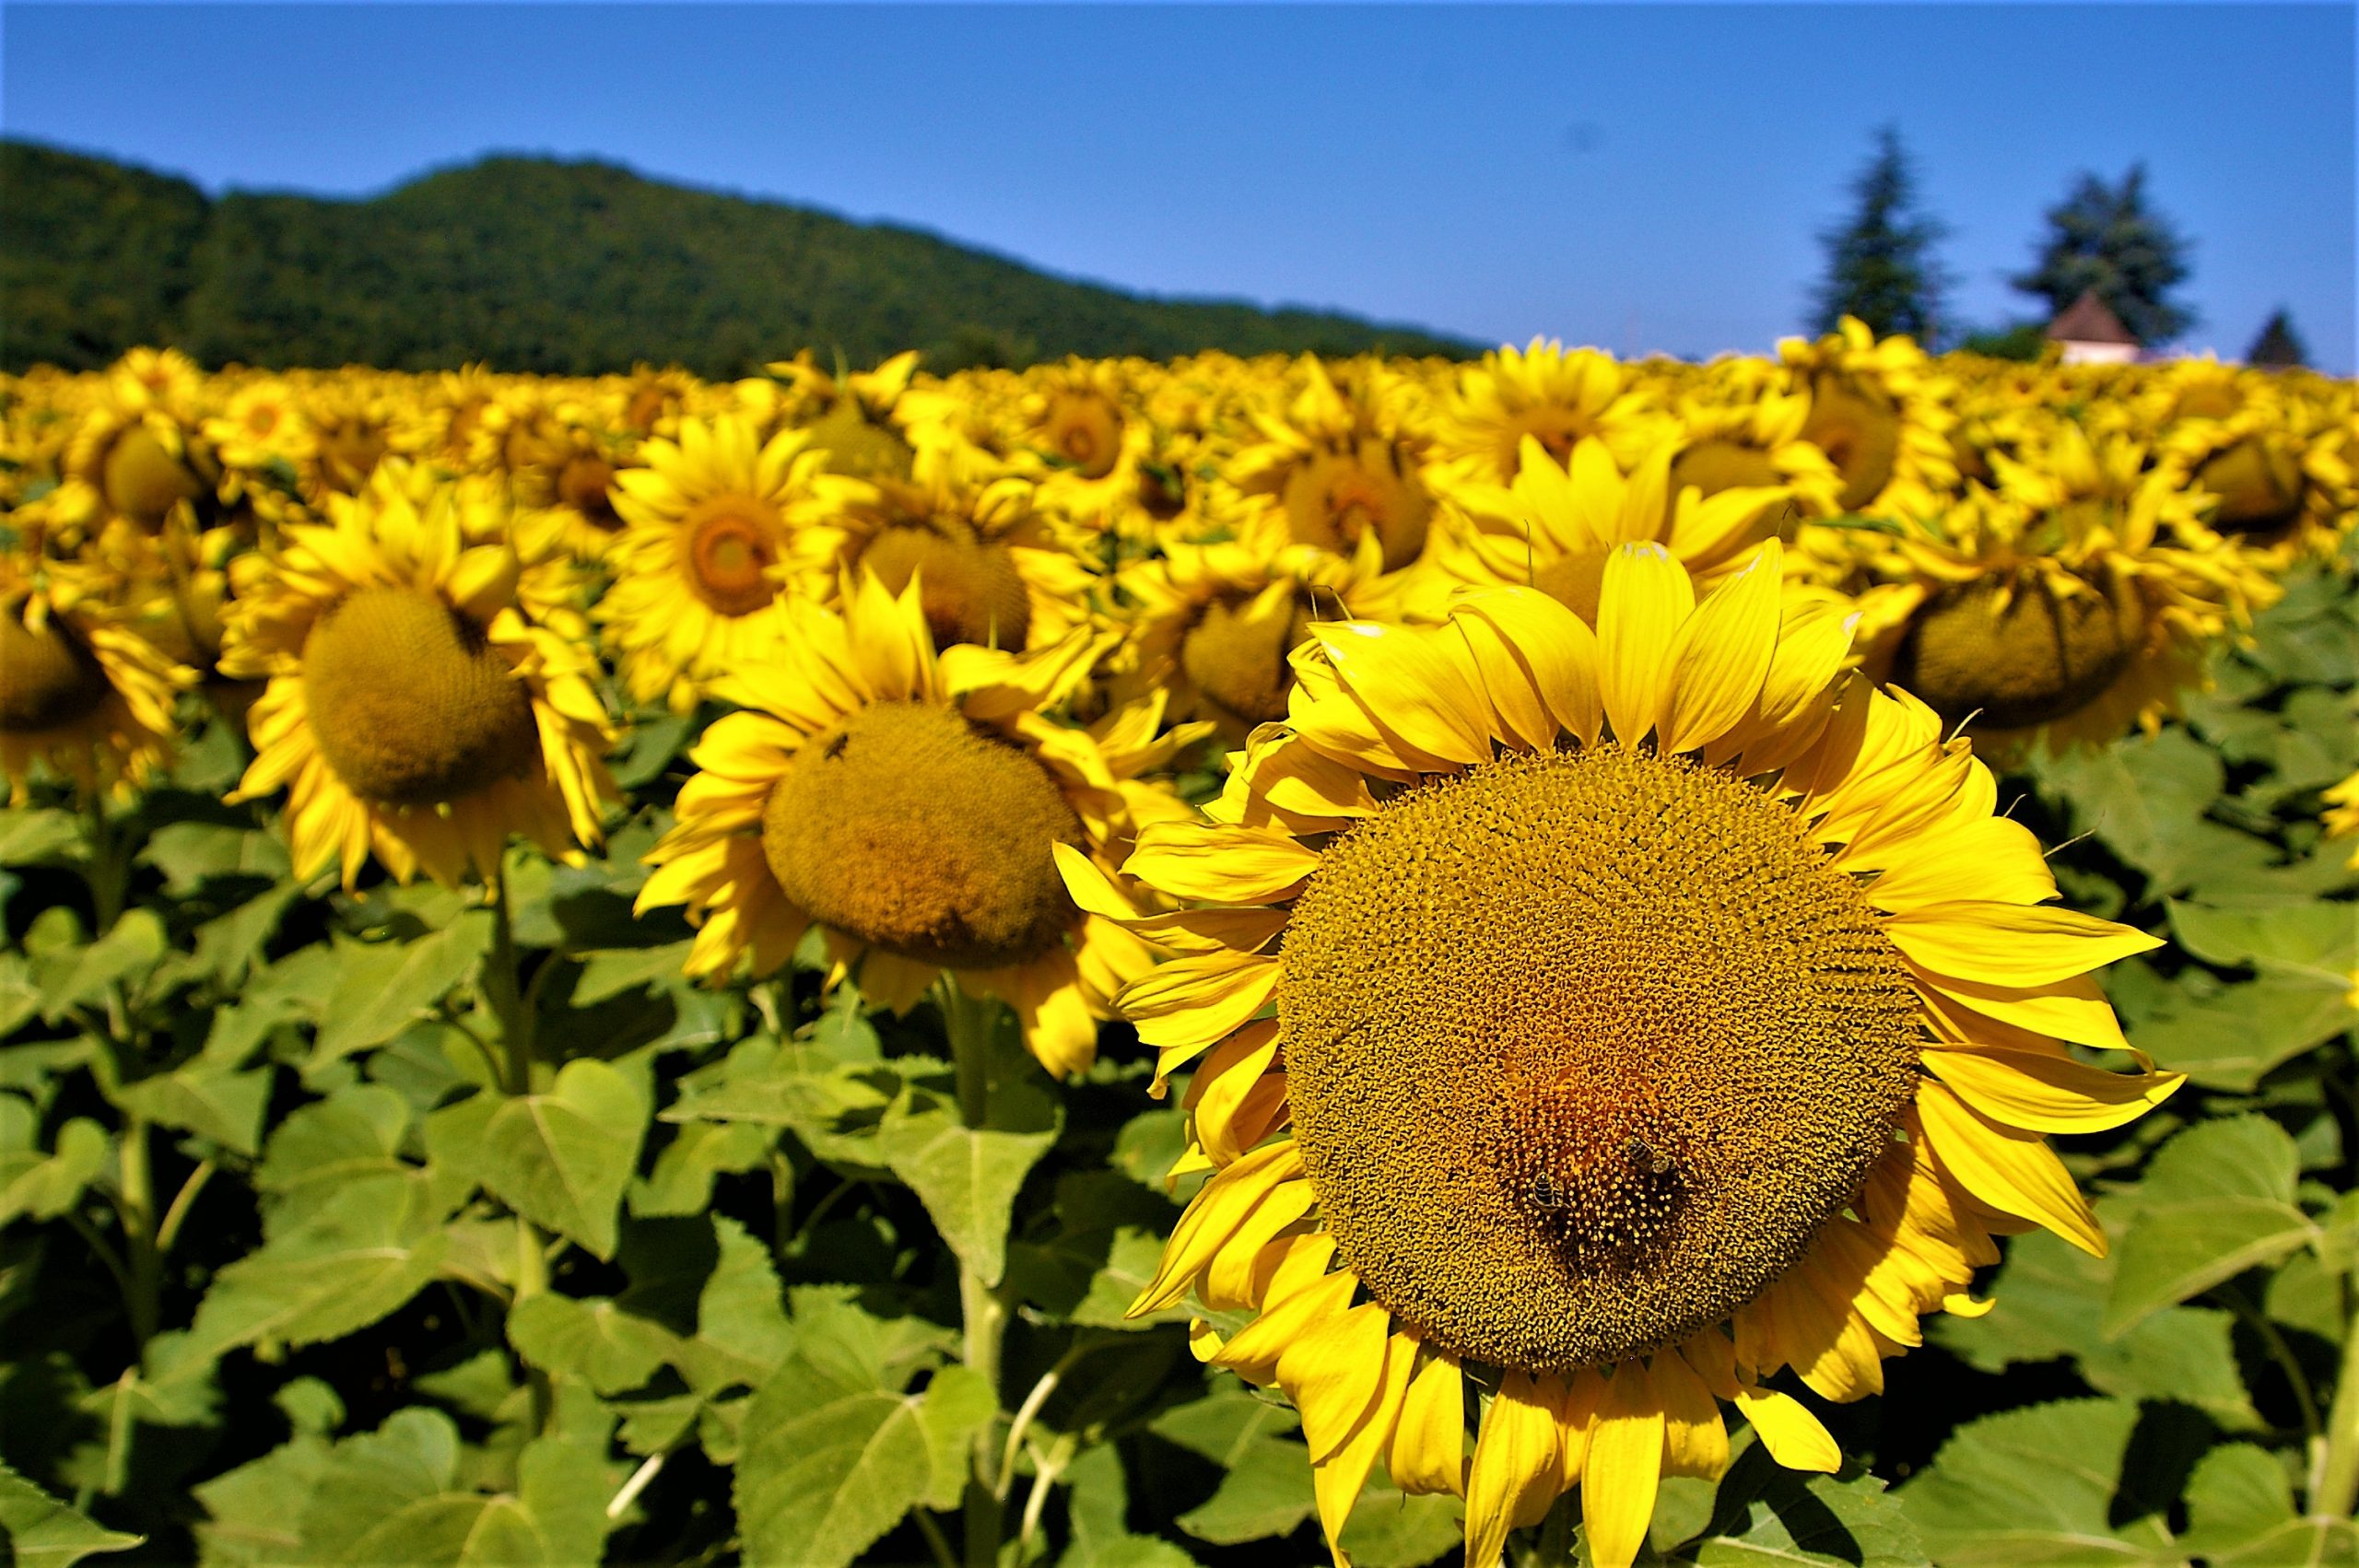 Field of sunflowers in bloom under a clear blue sky